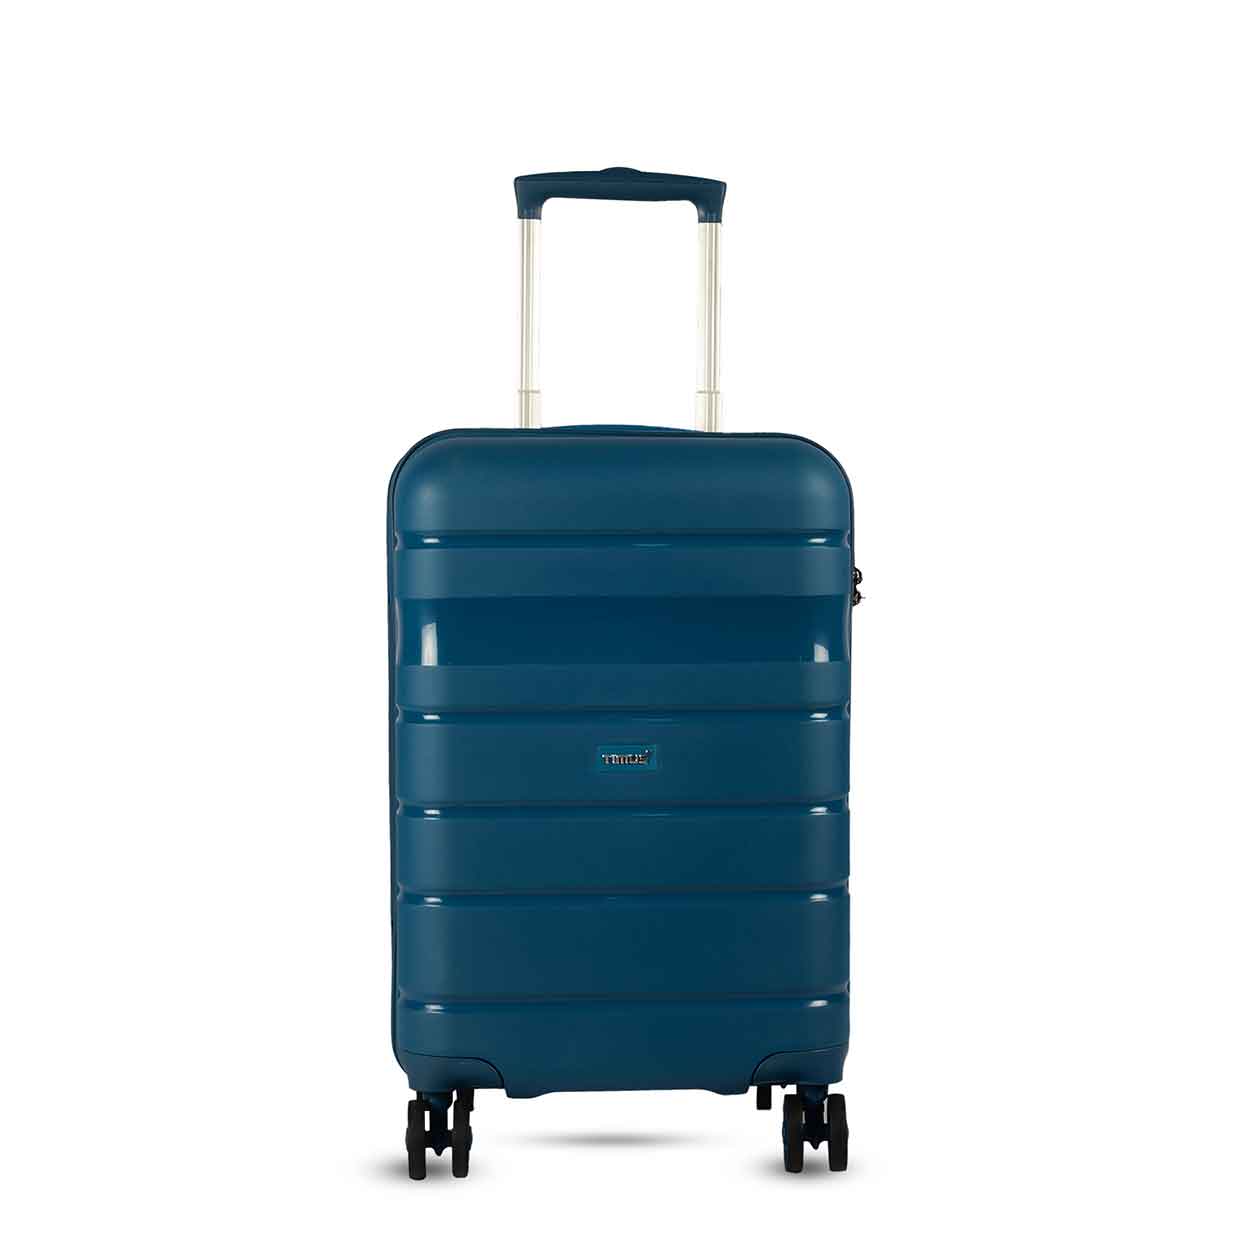 Timus-Lifestyle-Hard-Luggage-Trolley-Bag-Sunlight-Hard-Luggage-58-Blue-1